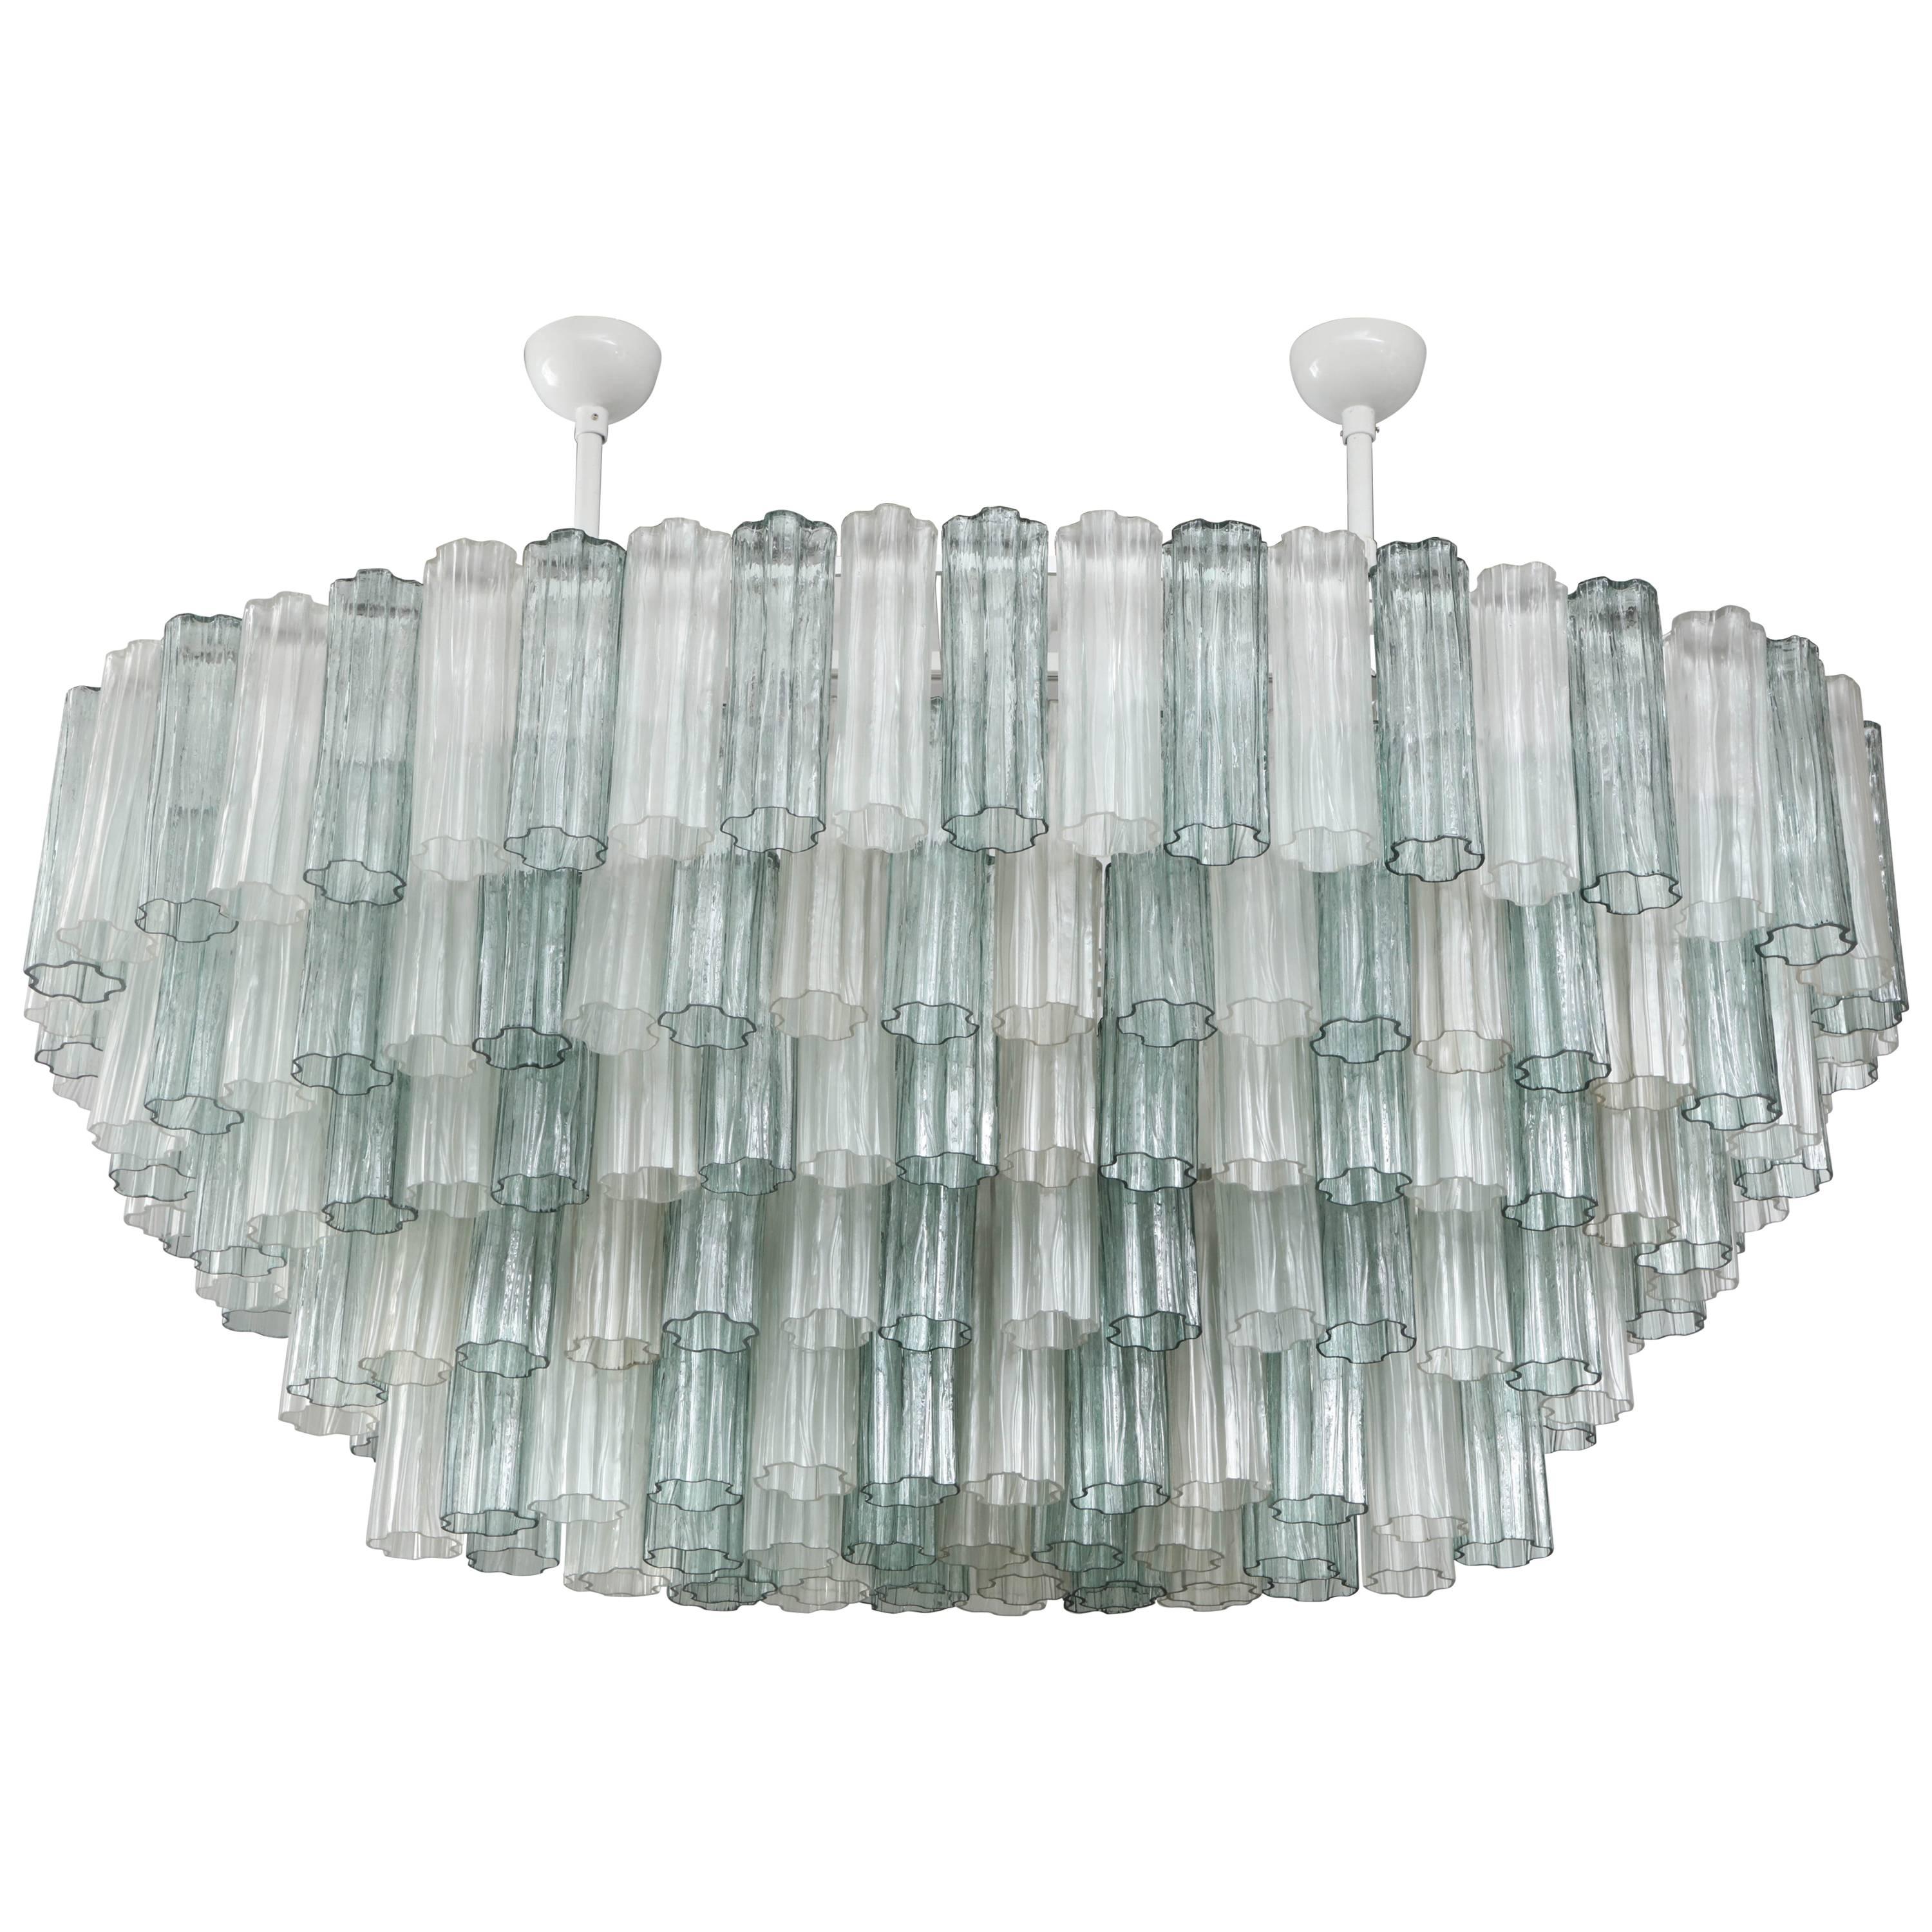  Oval Shaped Murano Glass Chandelier